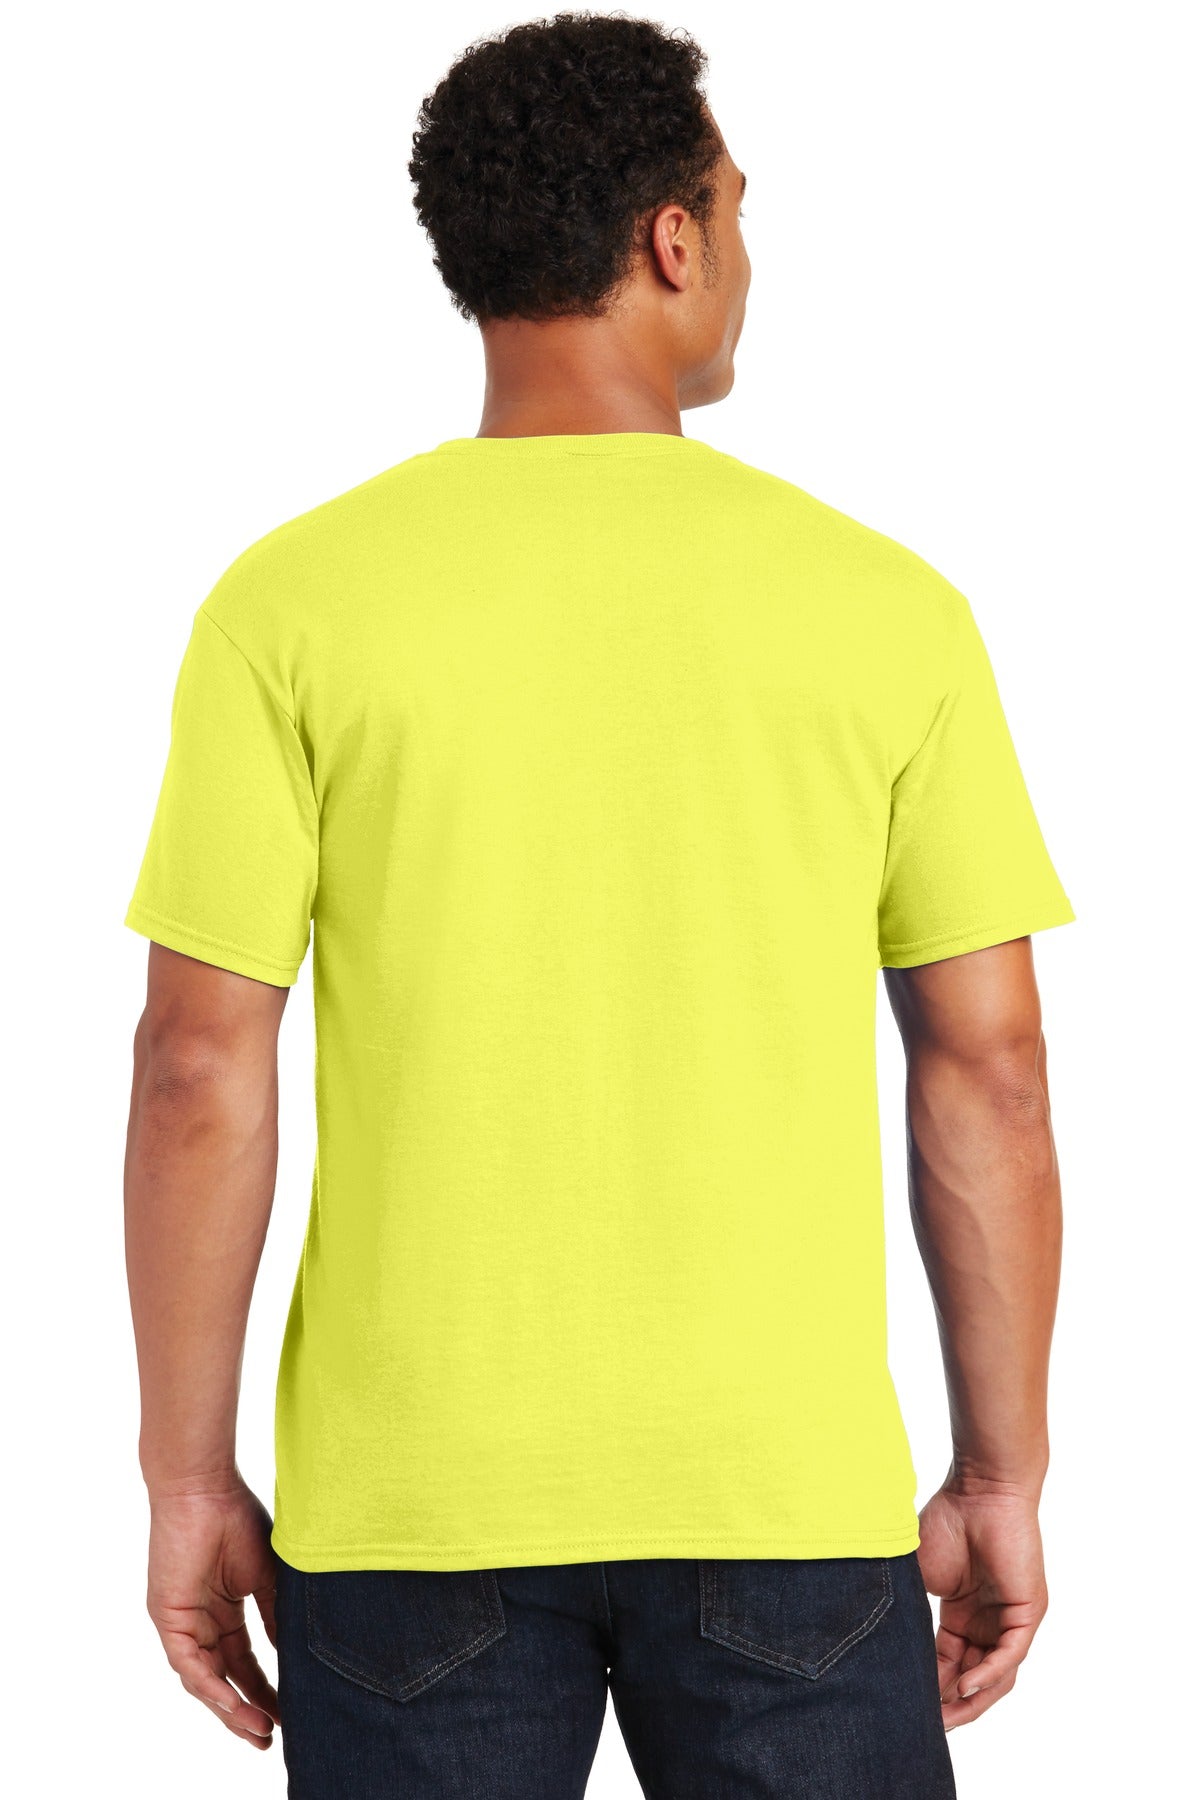 JERZEES® - Dri-Power® 50/50 Cotton/Poly T-Shirt. 29M [Neon Yellow] - DFW Impression